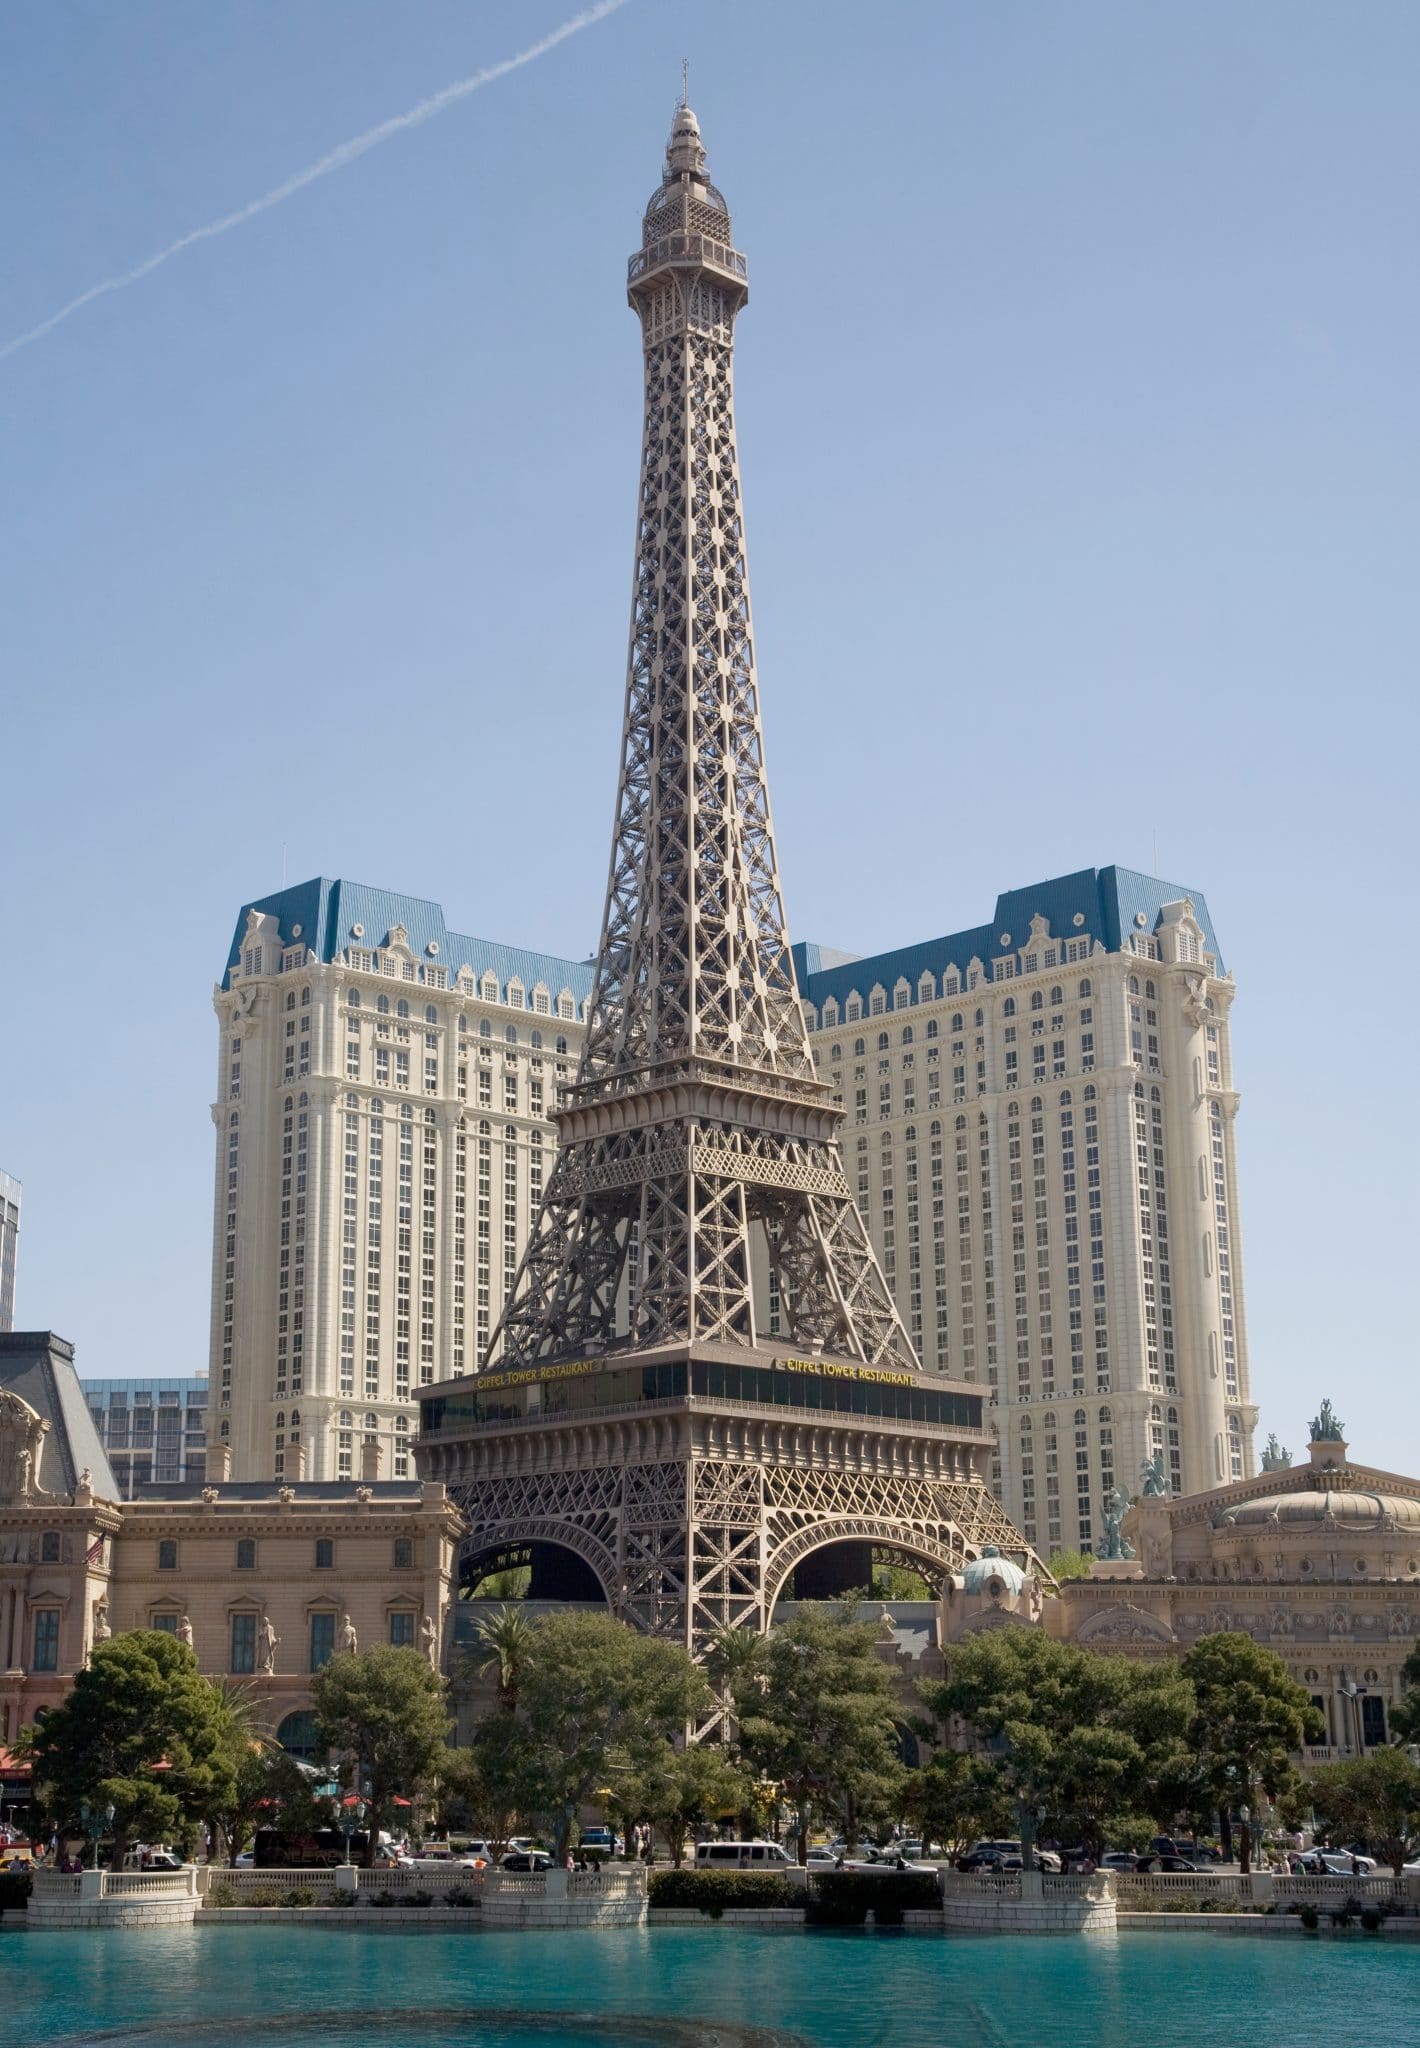 UPDATE: Paris Las Vegas to Annex Tower From Horseshoe 